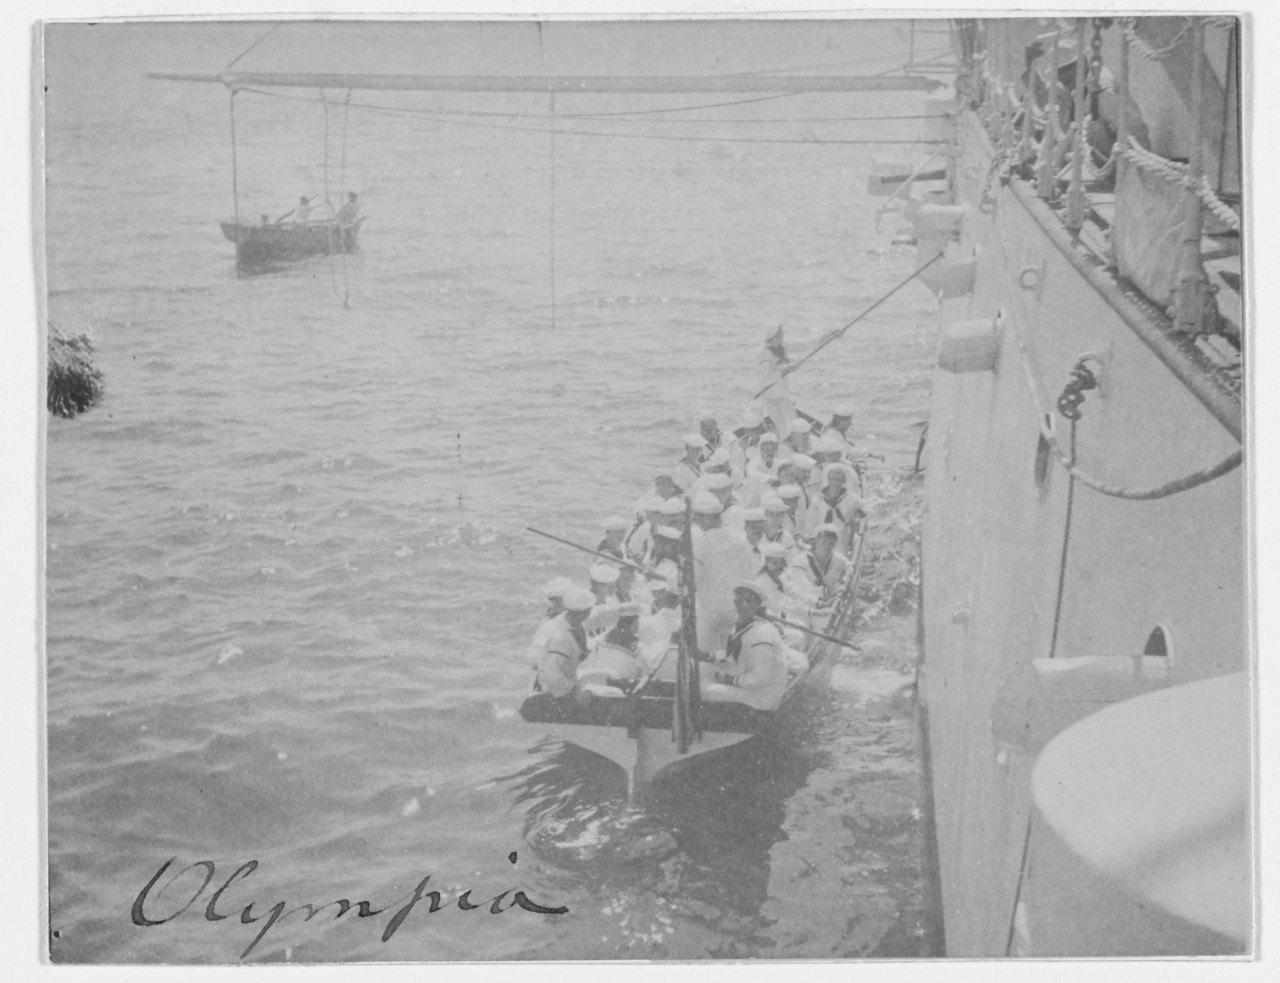 USS OLYMPIA (C-6) launch full of crewmen comes alongside, 1898. 